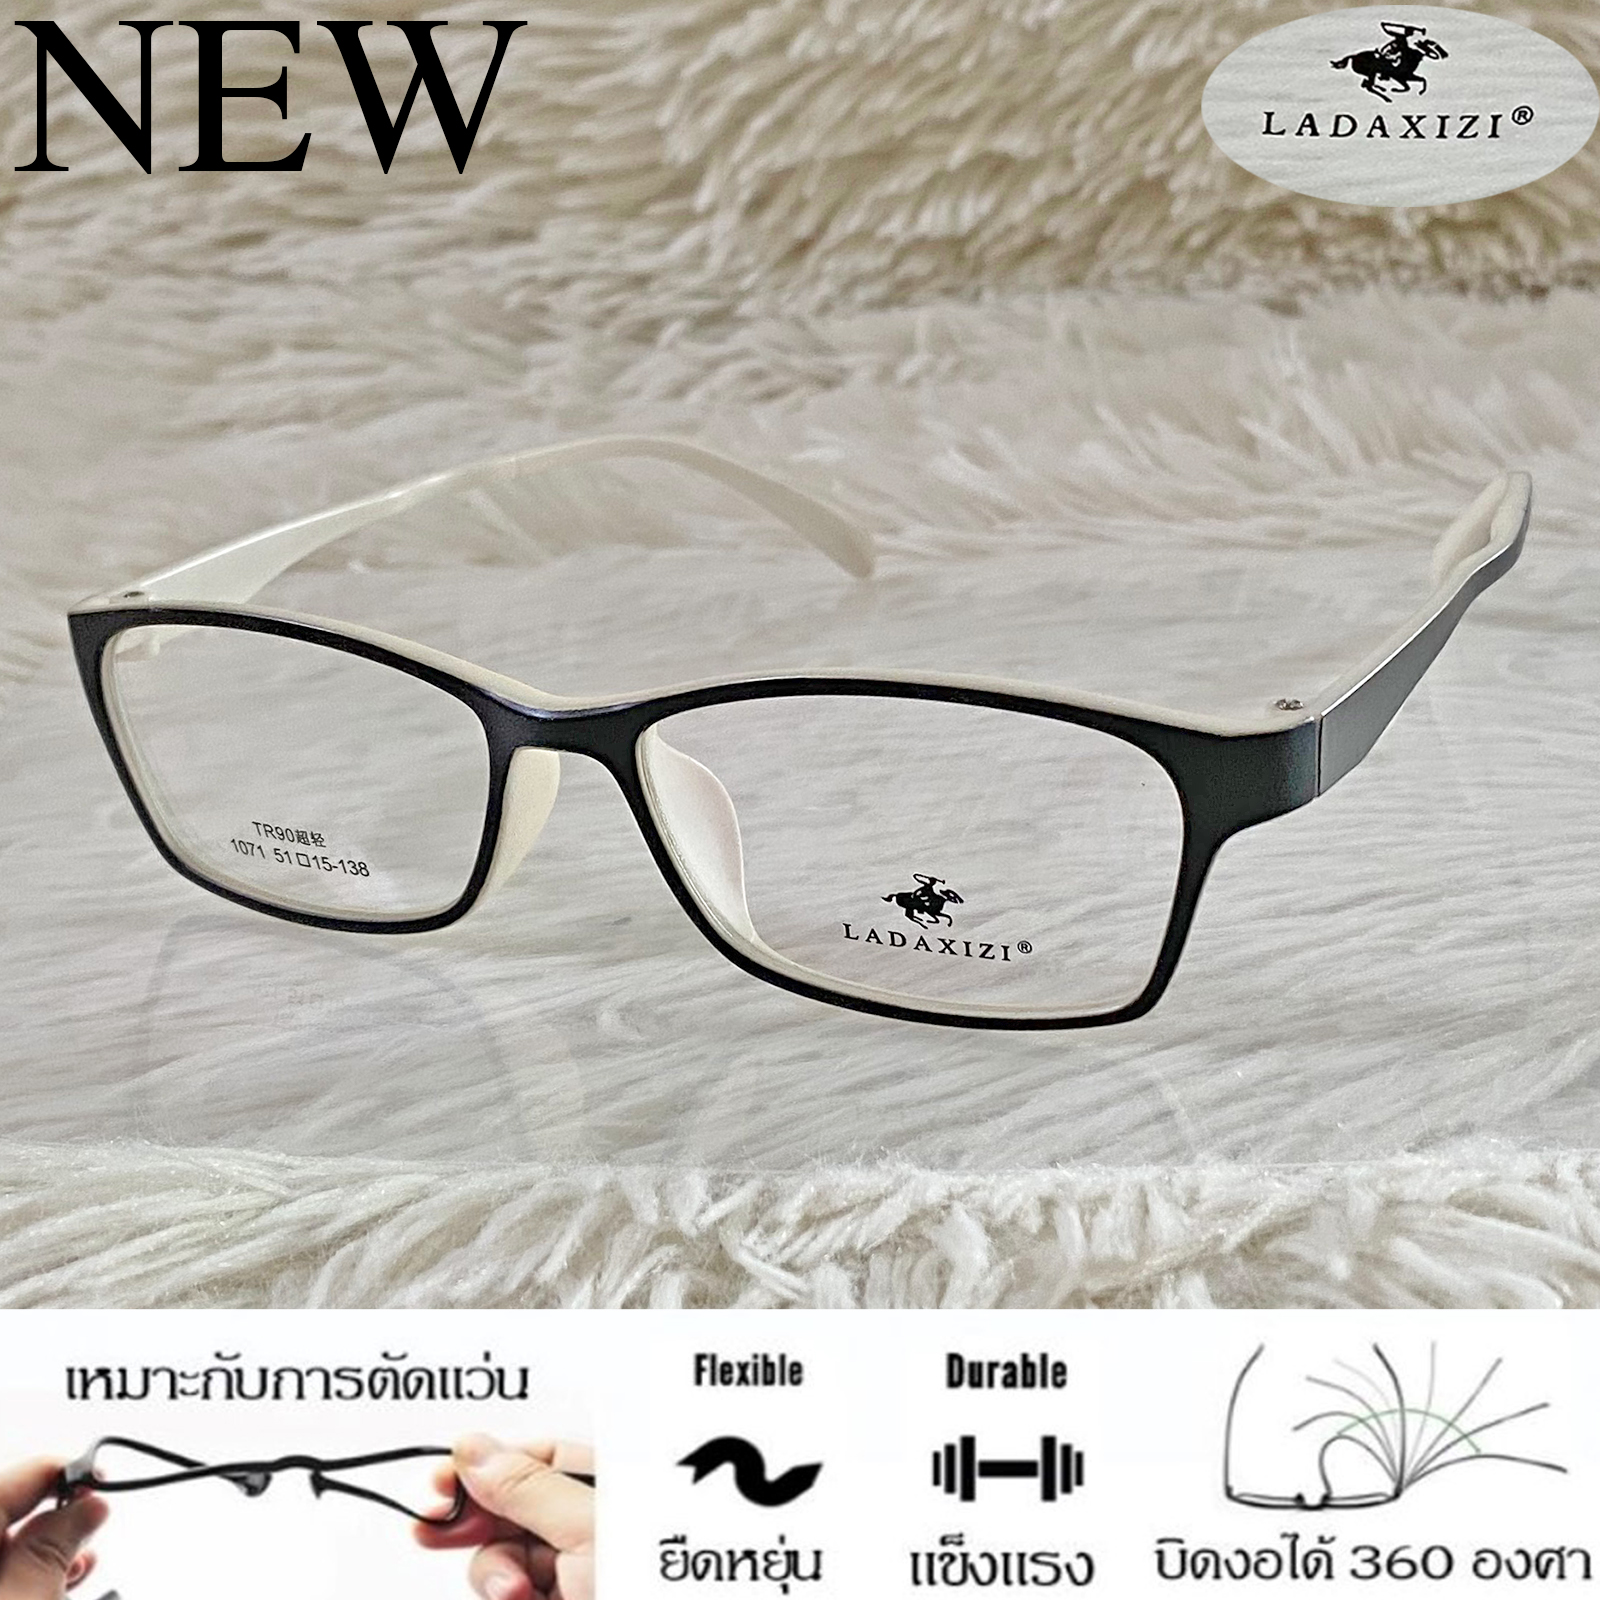 TR 90 กรอบแว่นตา สำหรับตัดเลนส์ แว่นตา Fashion ชาย-หญิง รุ่น LADAXIZI 10711 สีดำ กรอบเต็ม ทรงเหลี่ยม ขาข้อต่อ ทนความร้อนสูง รับตัดเลนส์ ทุกชนิด